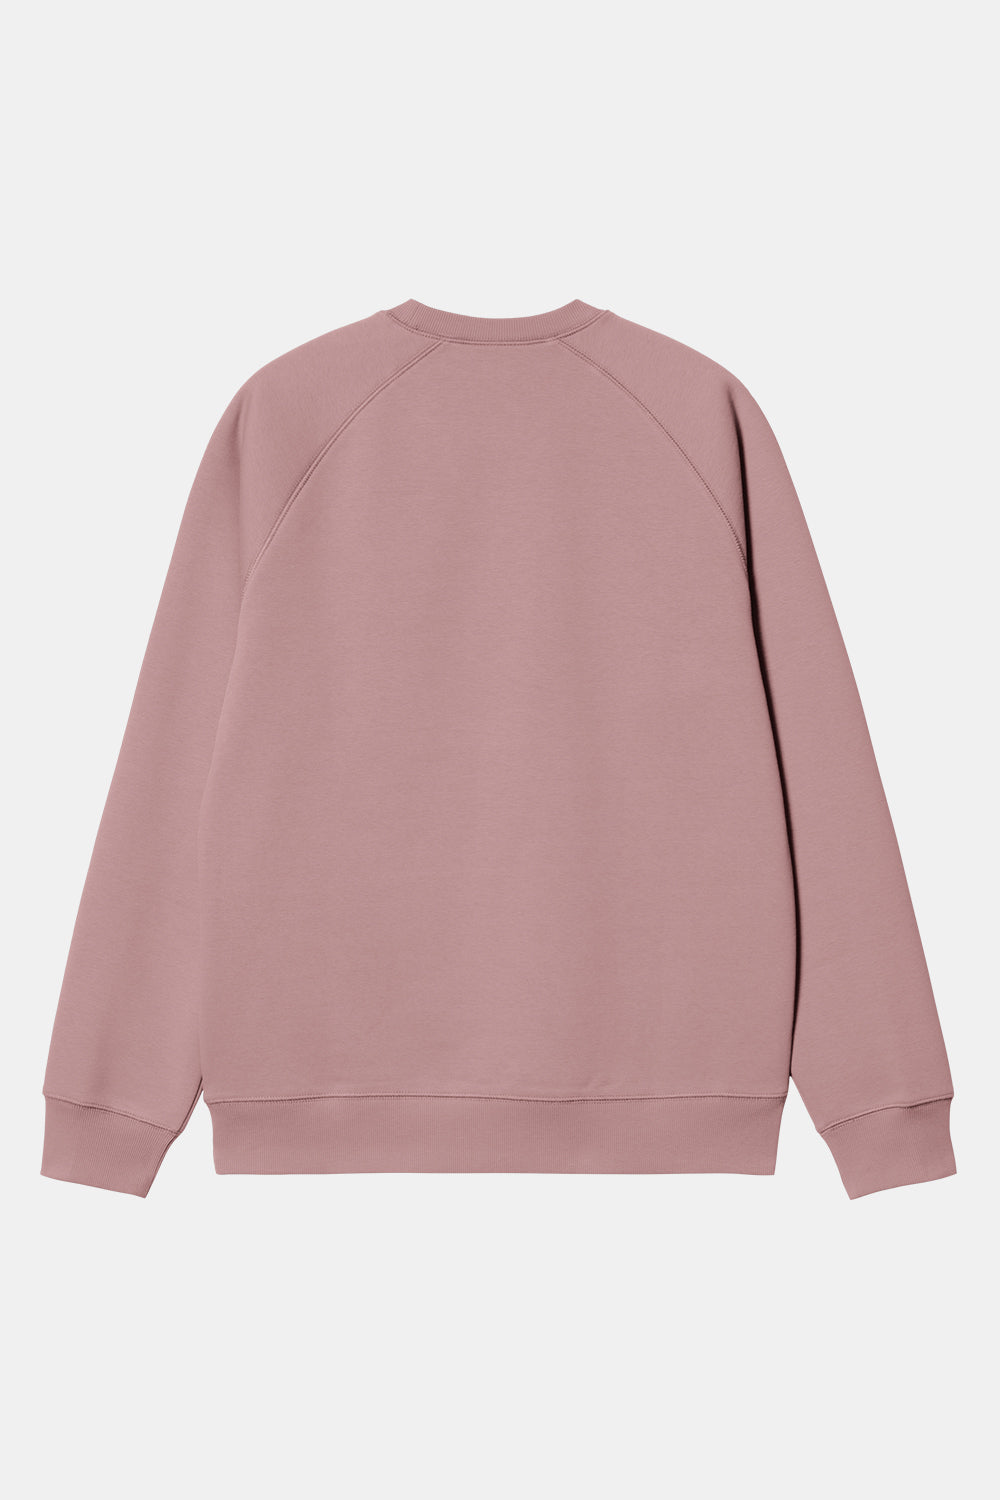 Carhartt WIP Chase Sweatshirt (Glassy Pink/Gold)